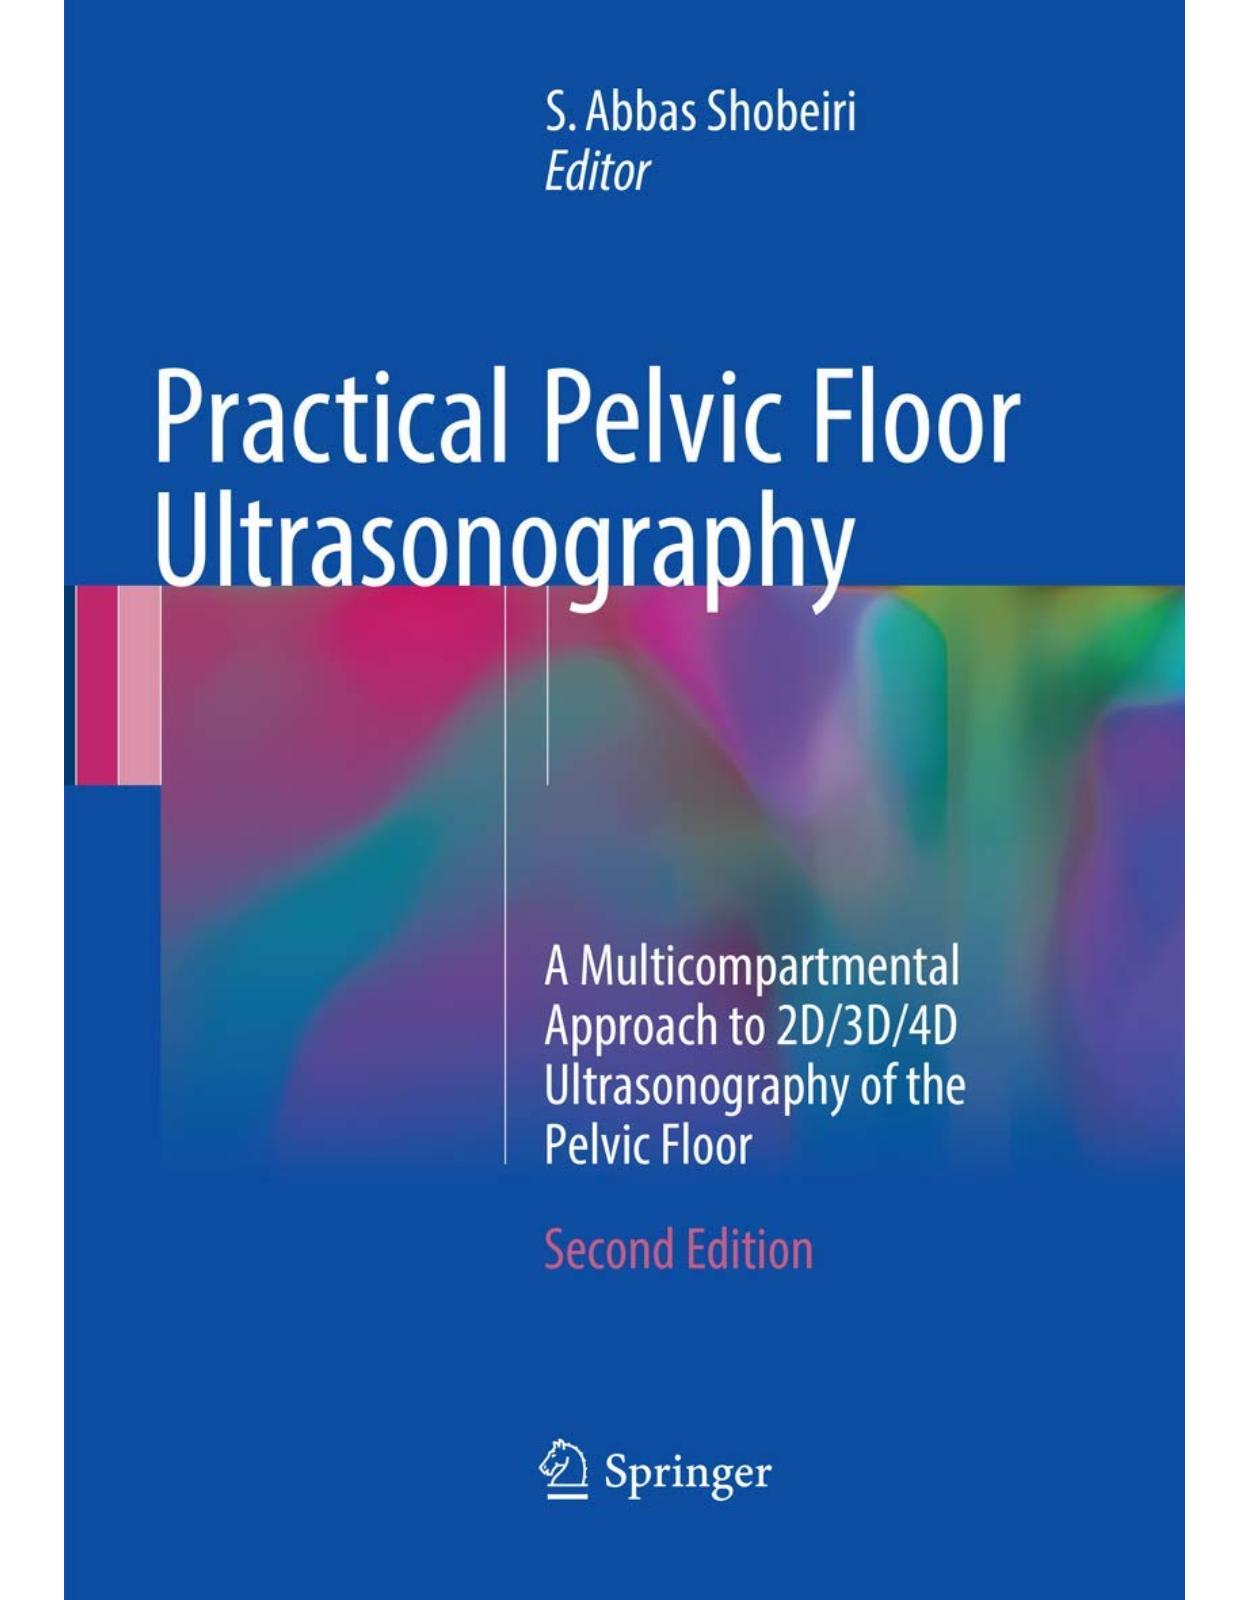 Practical Pelvic Floor Ultrasonography